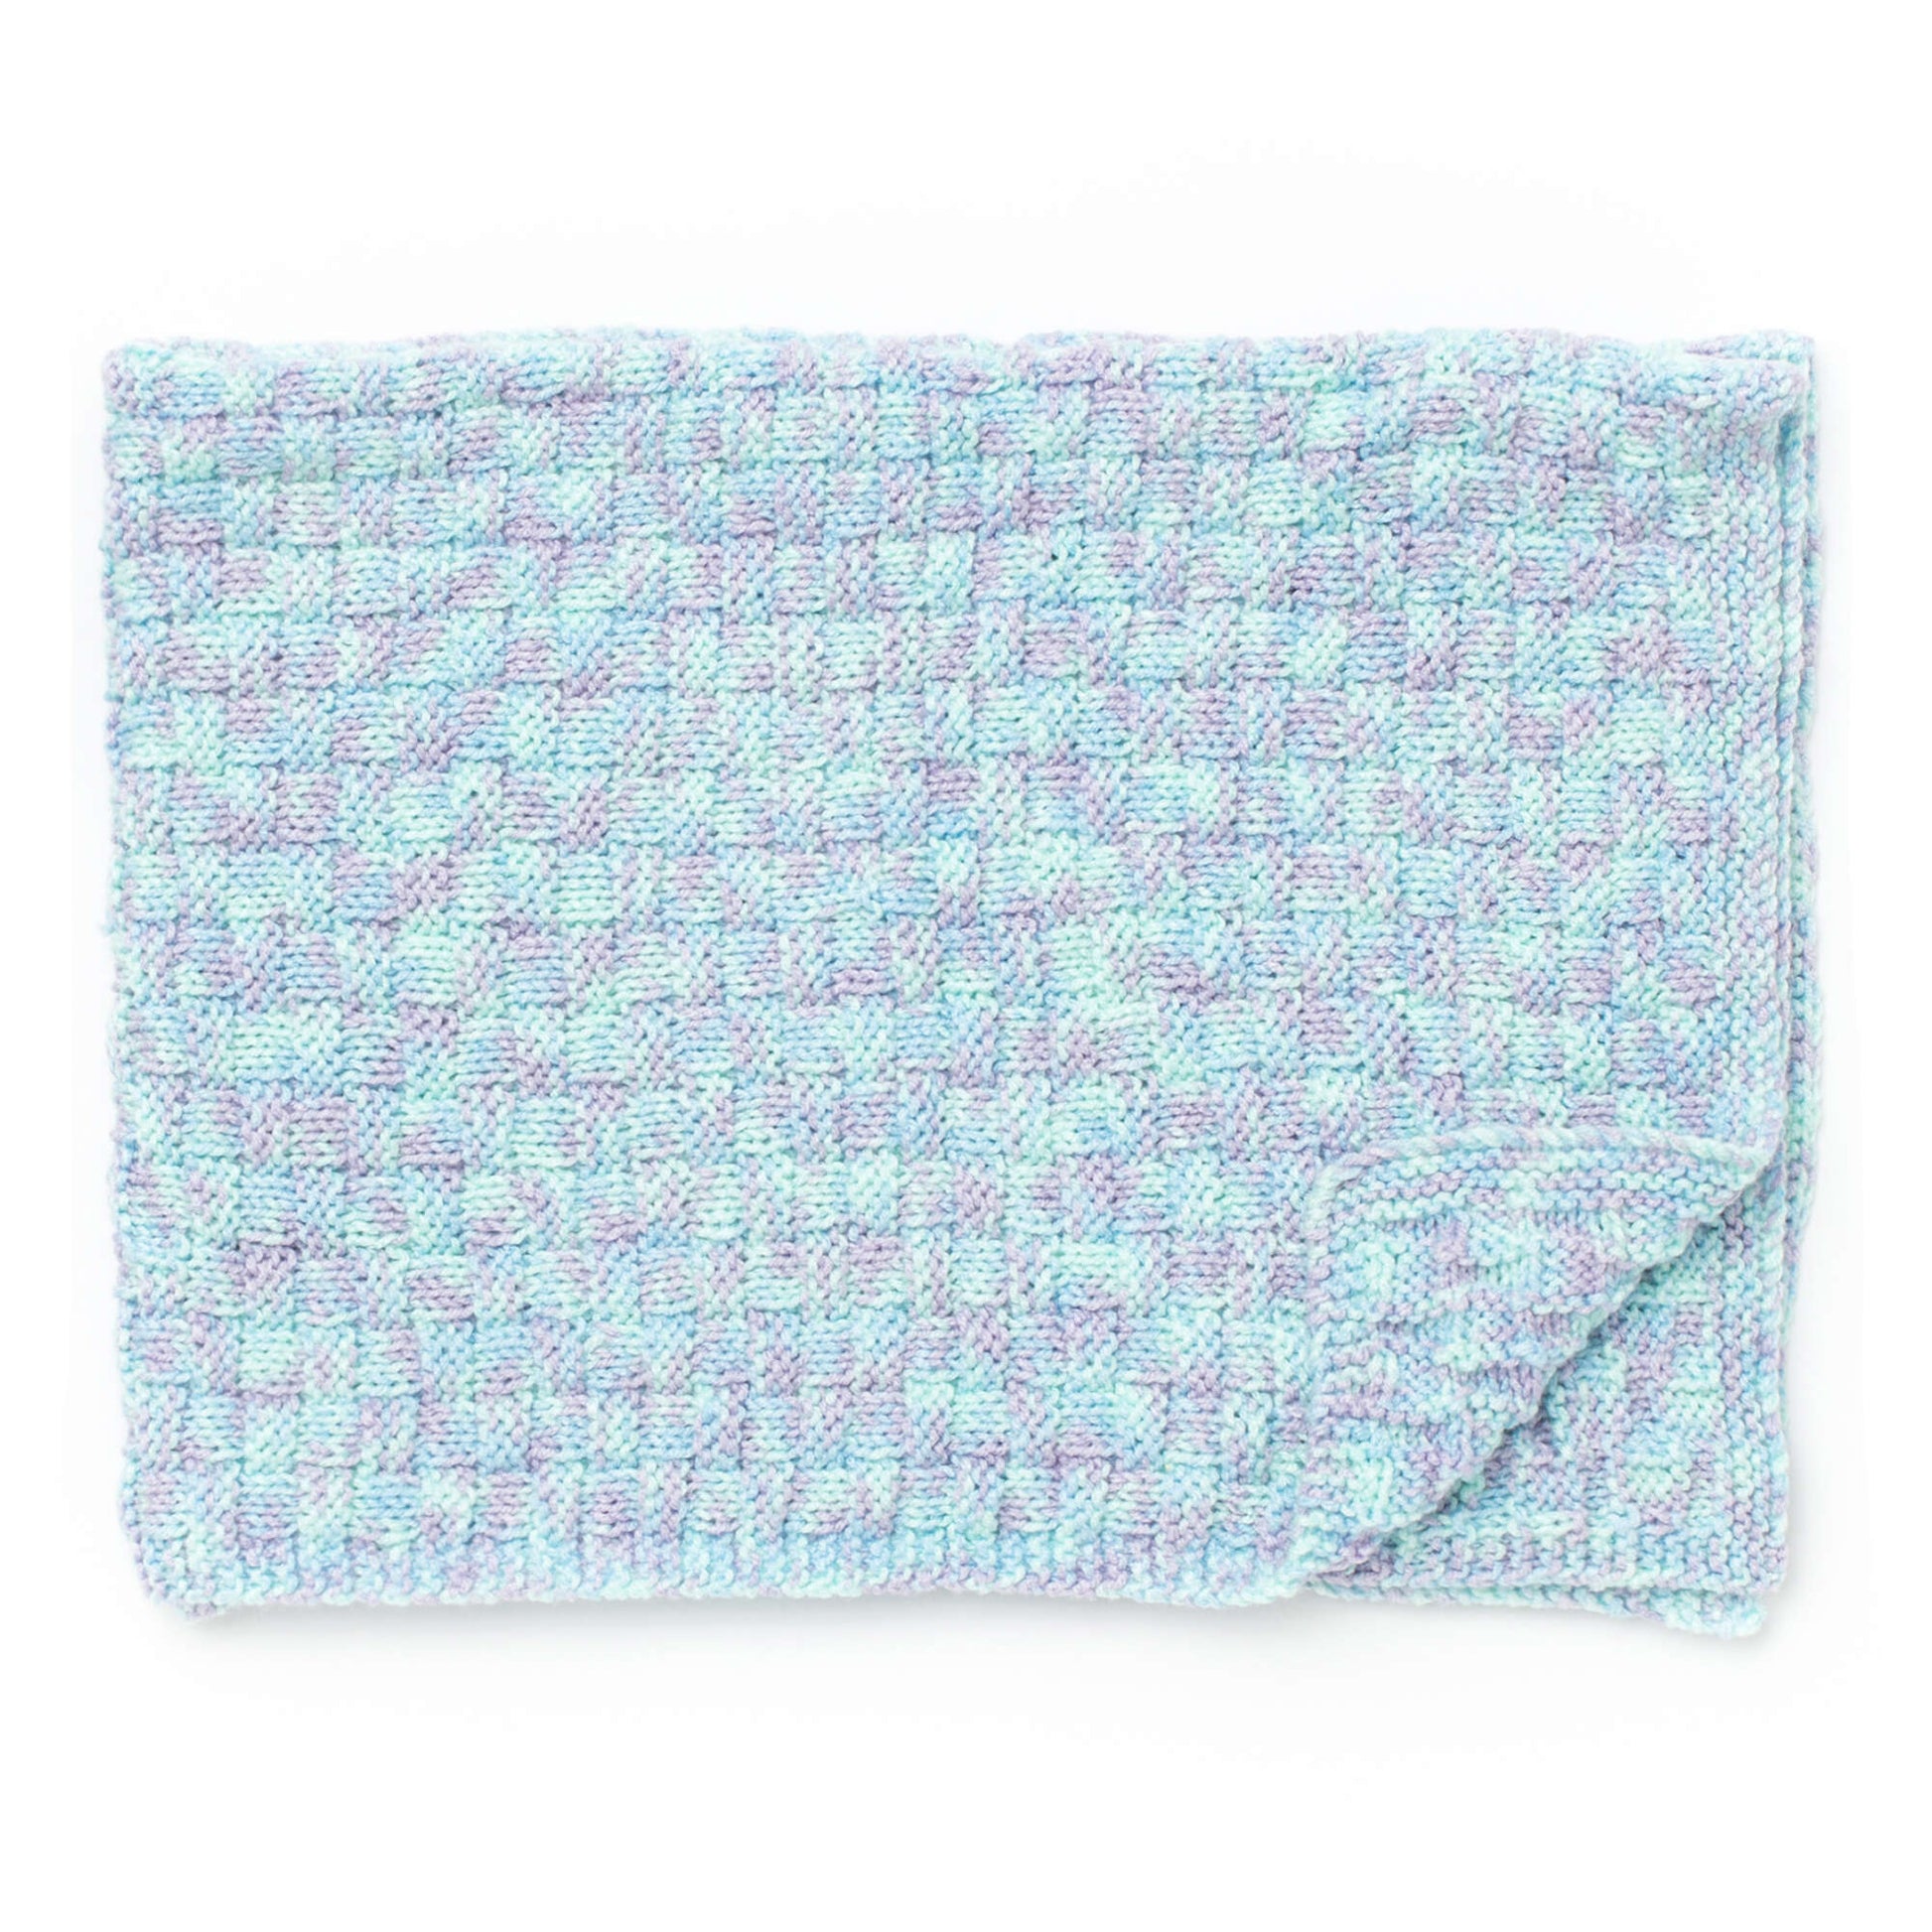 Free Caron Gift Of Love Knit Baby Blanket Pattern